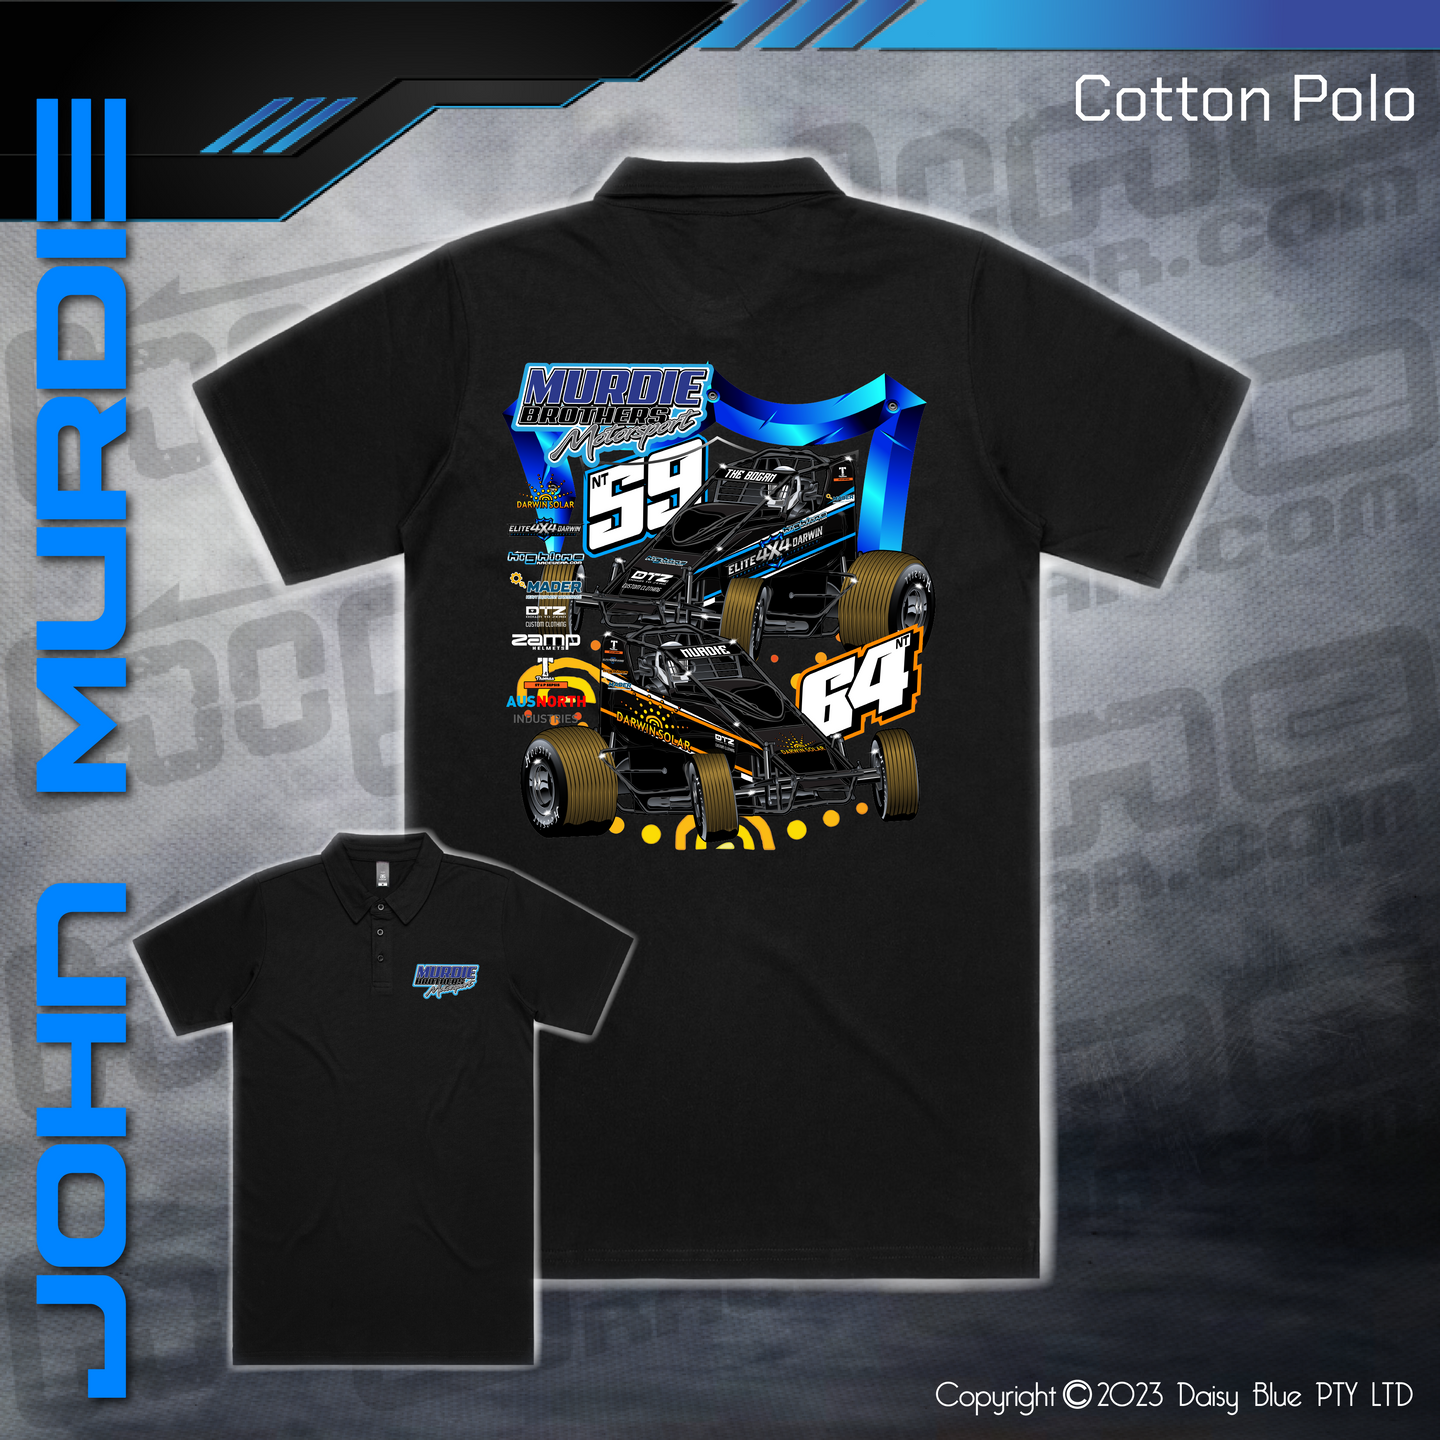 Cotton Polo - Murdie Motorsport